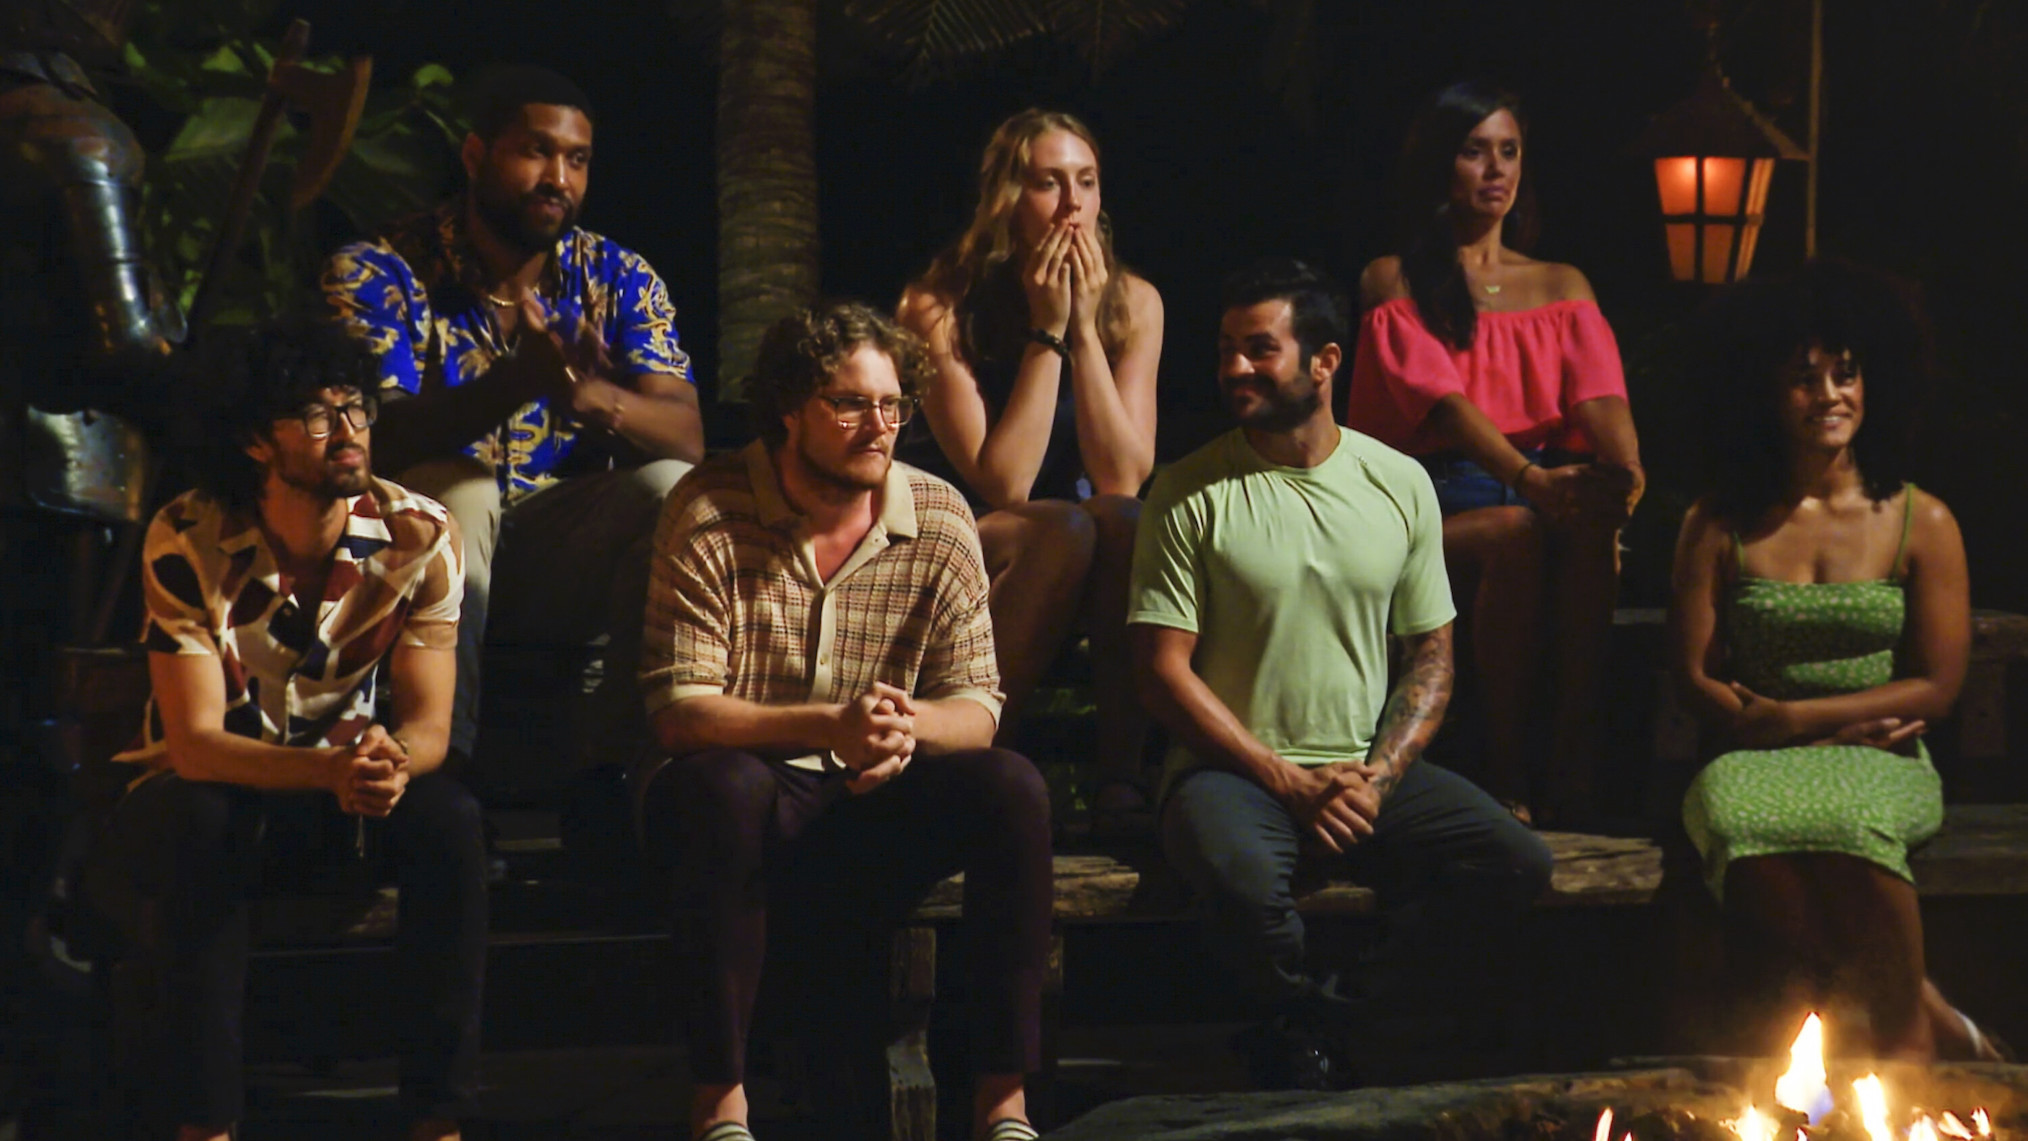 The jury in the 'Survivor' 44 finale